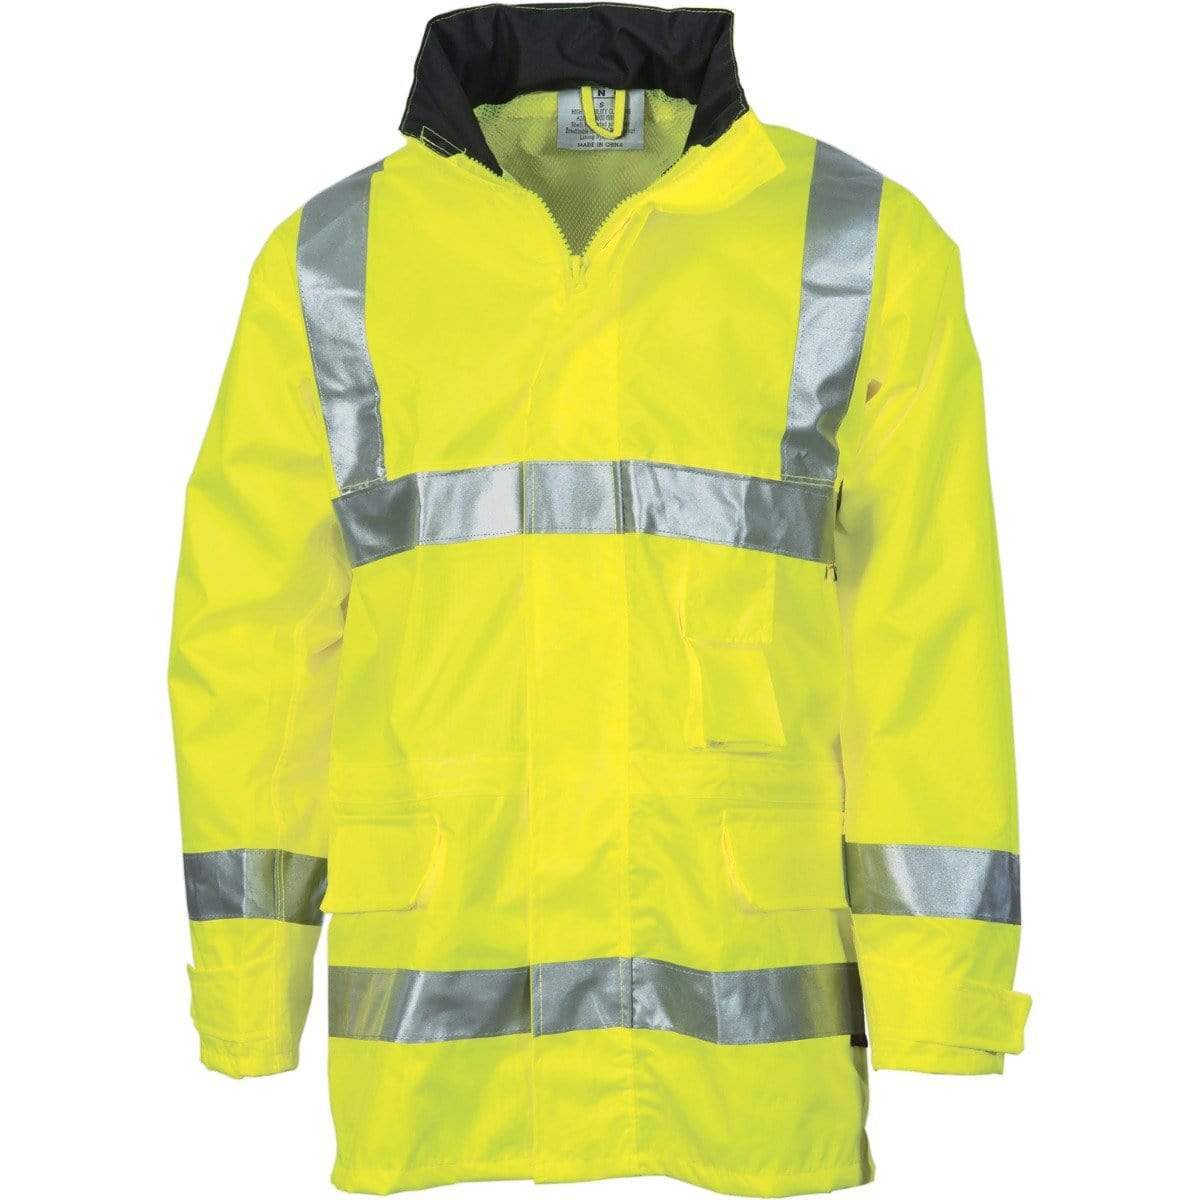 Dnc Workwear Hi-vis D/n Breathable Rain Jacket With 3m Reflective Tape - 3871 Work Wear DNC Workwear Yellow S 